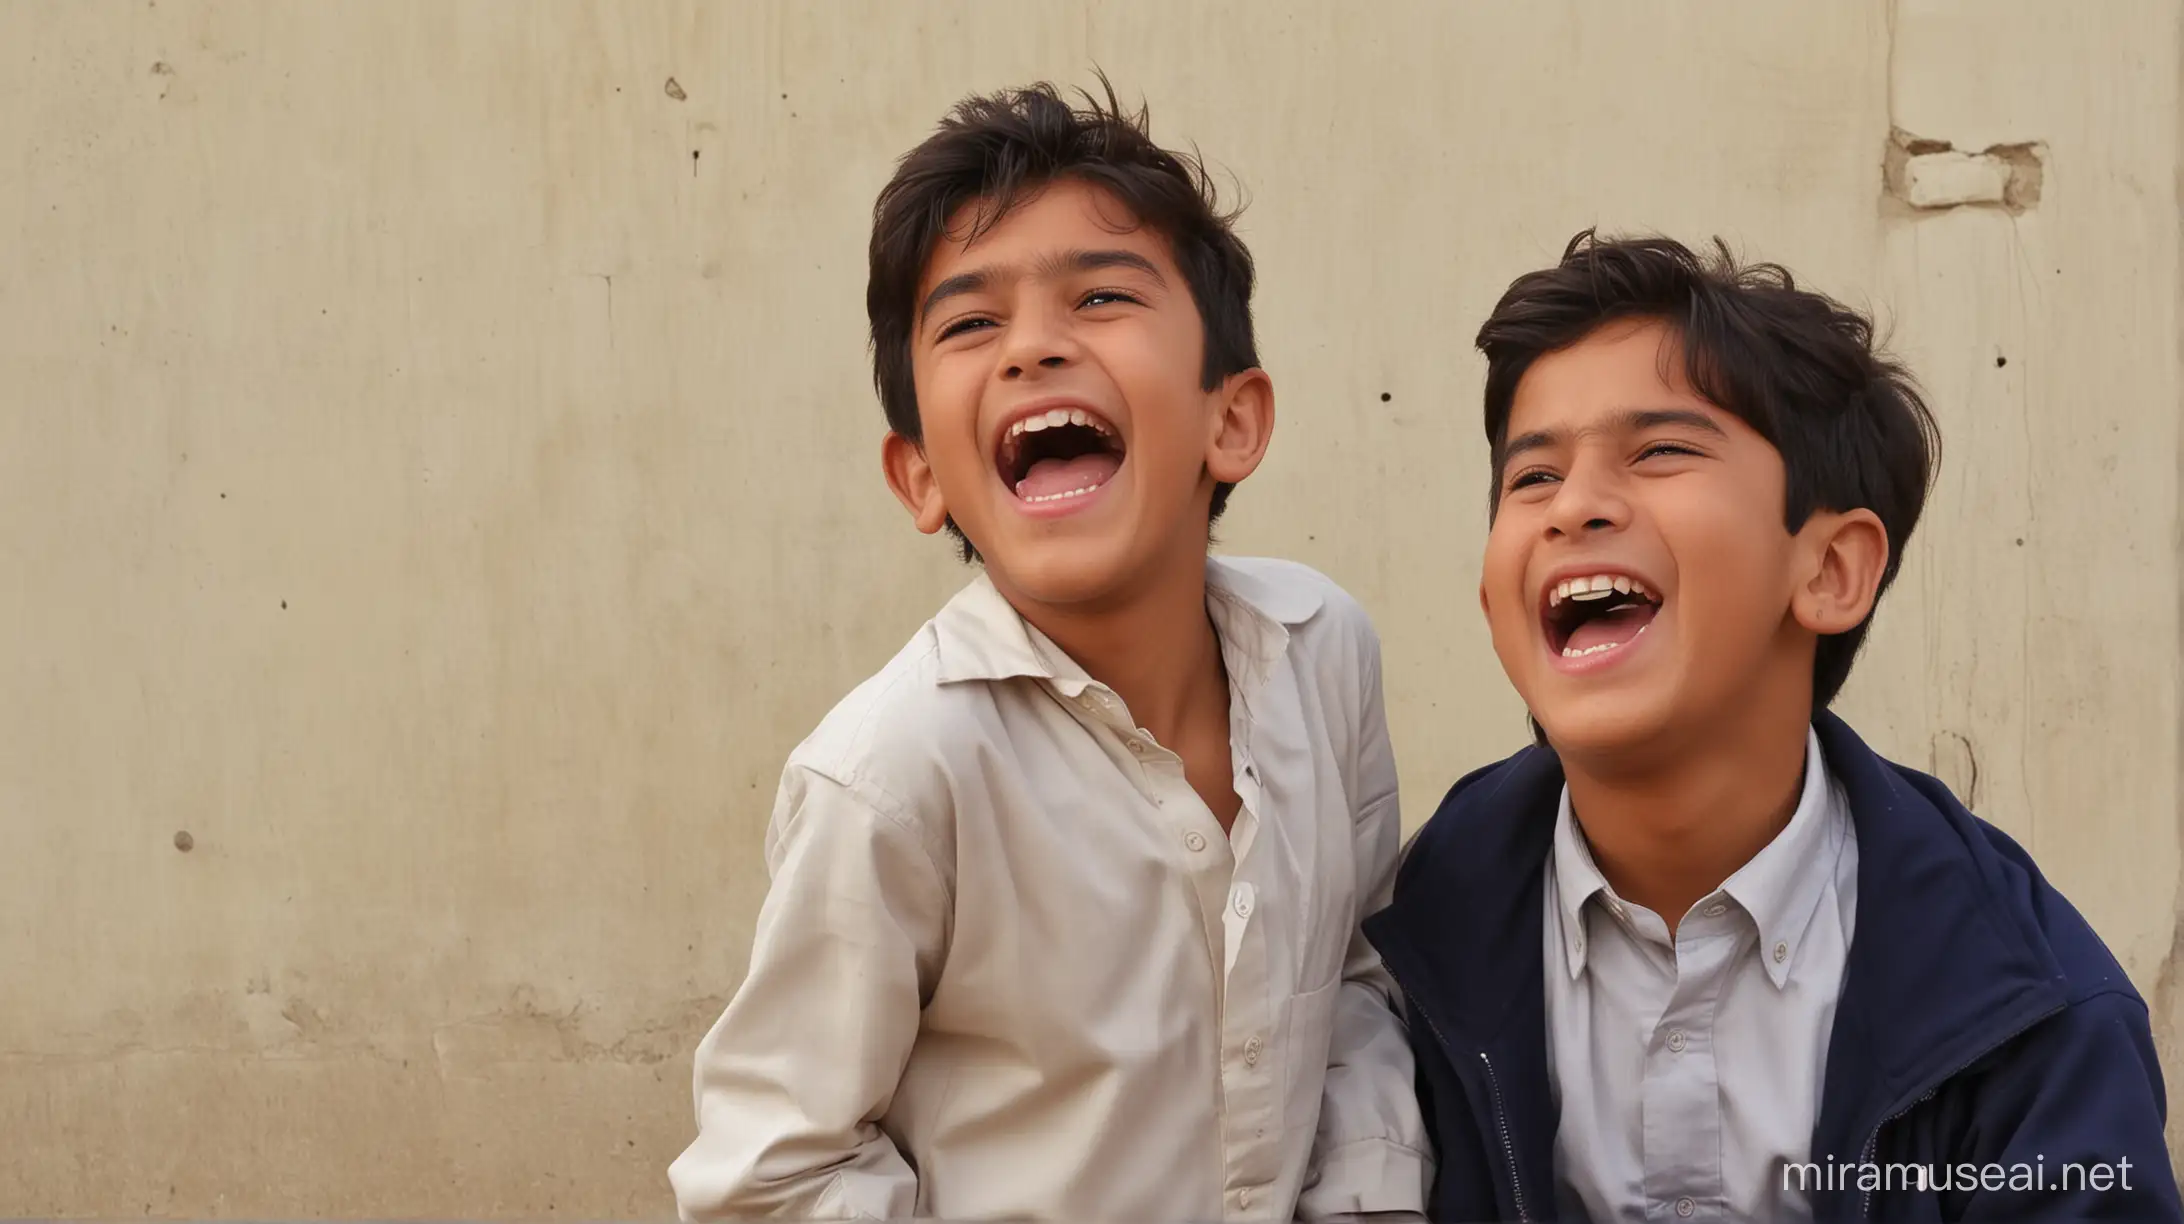 Joyful Pakistani Boy Laughing with Genuine Happiness